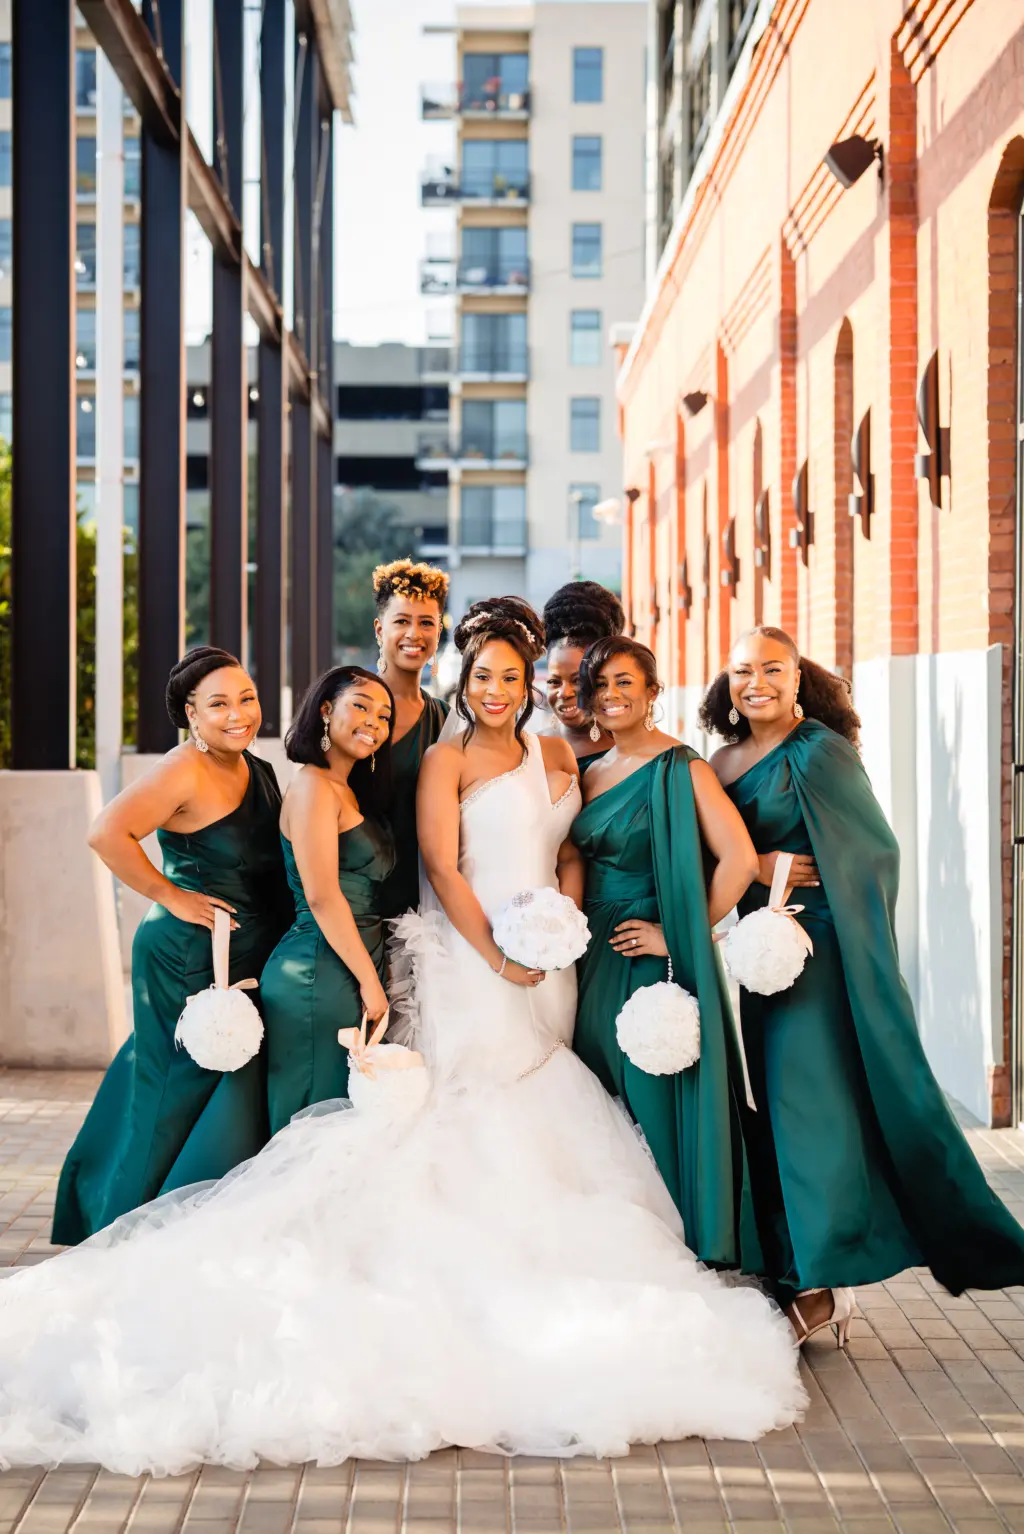 Elegant Matching Emerald Green Satin Bridesmaids Dresses Inspiration | One Shoulder Tulle Mermaid Pantora Bridal Wedding Dress Ideas | White Flower Ball Bouquet Alternatives | Tampa Bay Florist FH Events